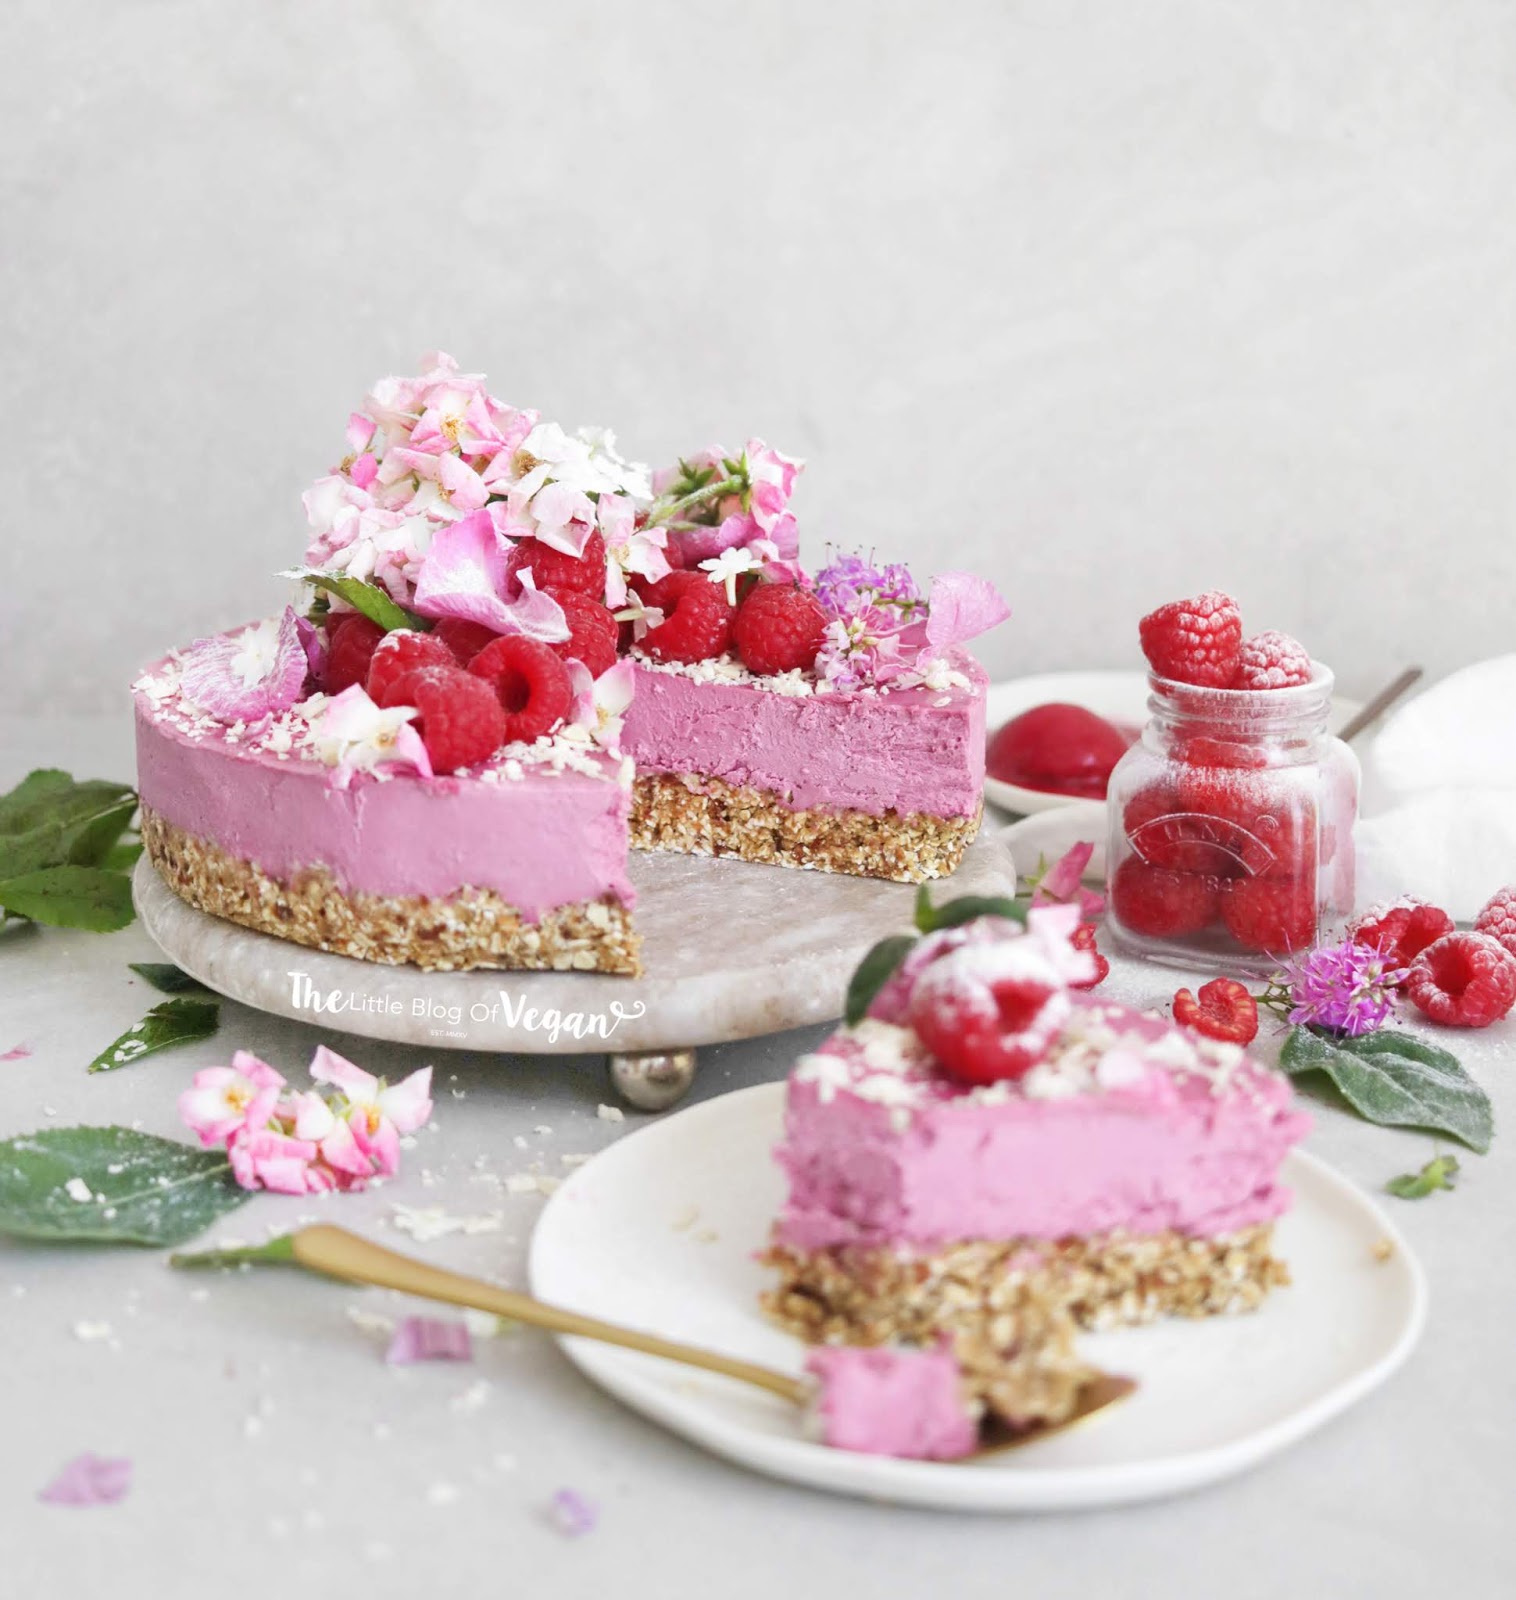 Raw raspberry cheesecake recipe | The Little Blog Of Vegan